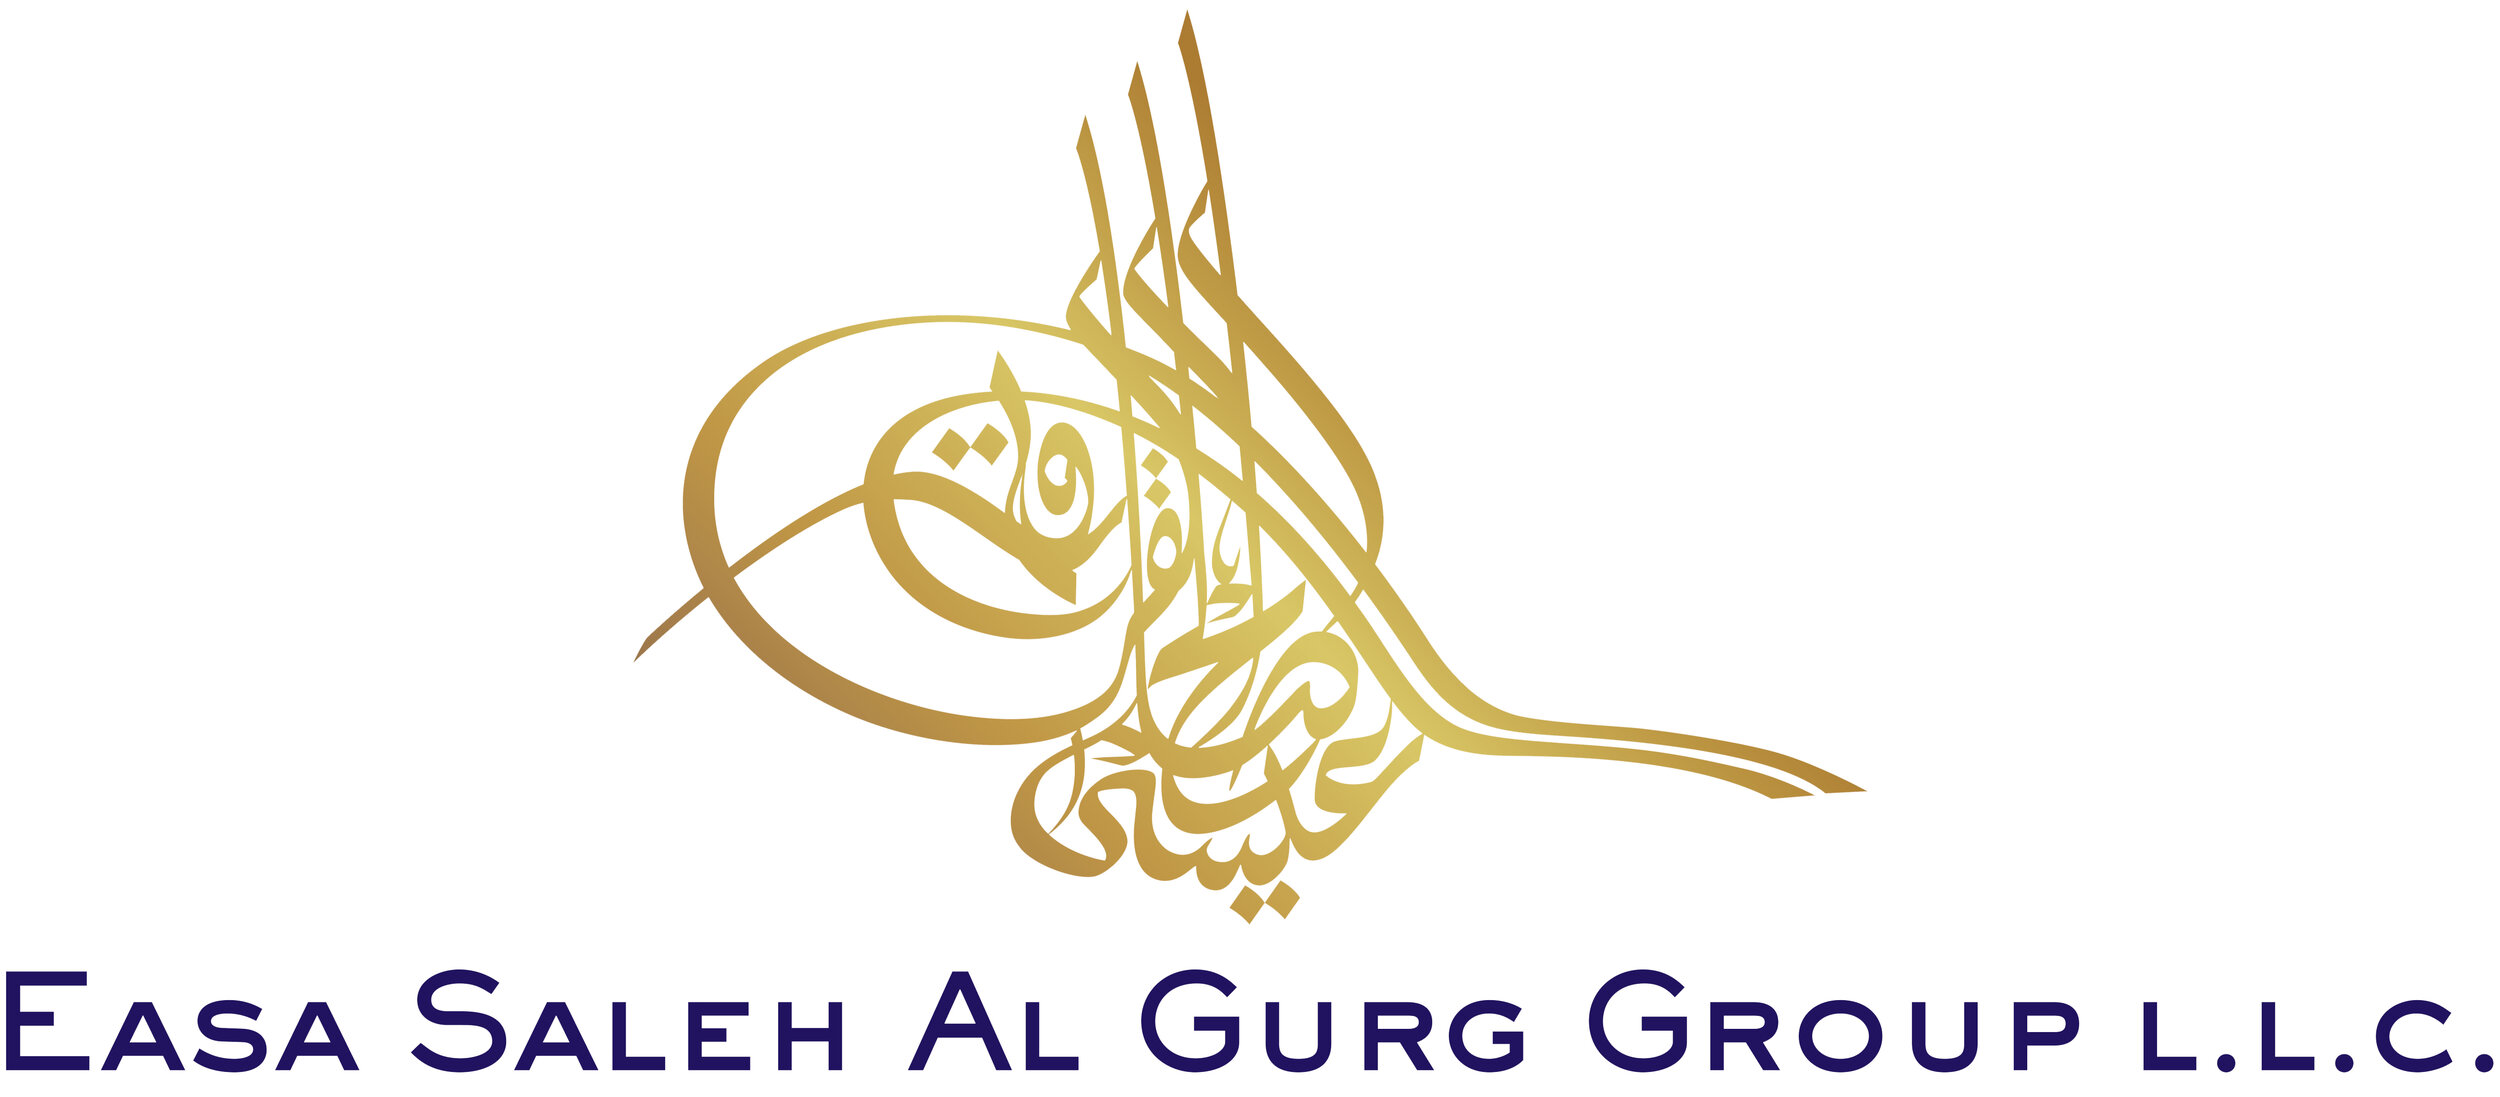 Easa Saleh Al Gurg Group.jpg